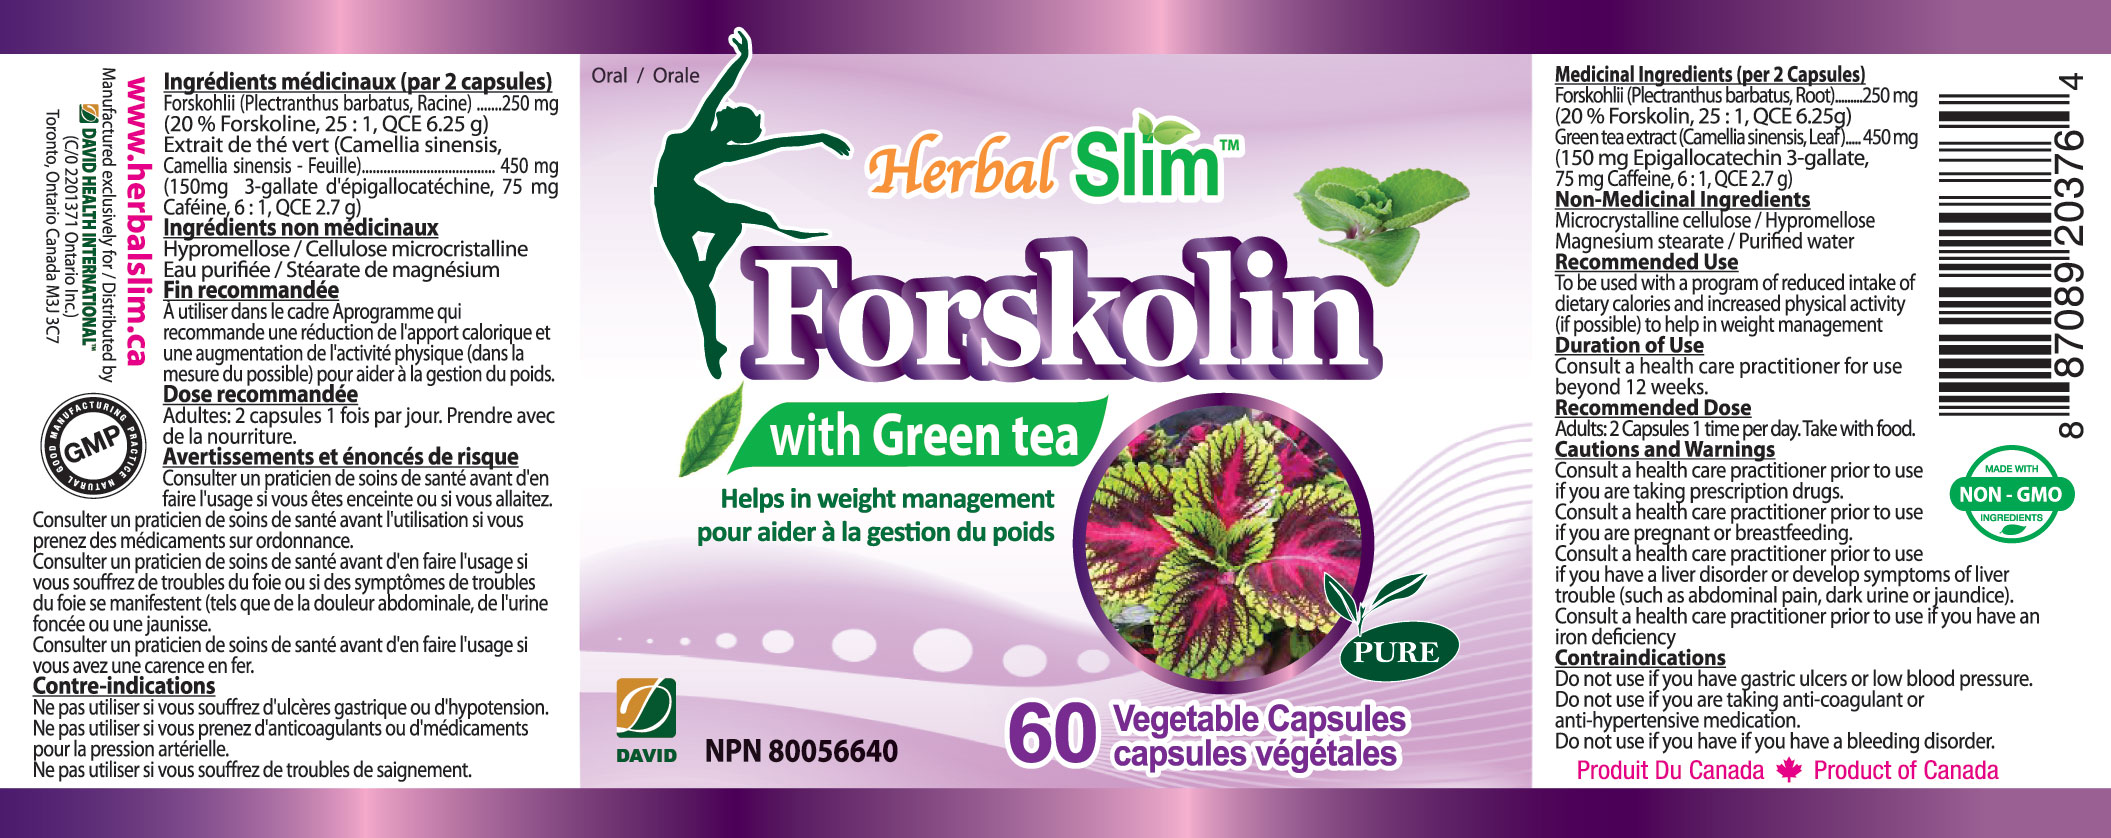 HerbalSlim Forskolin with Green Tea